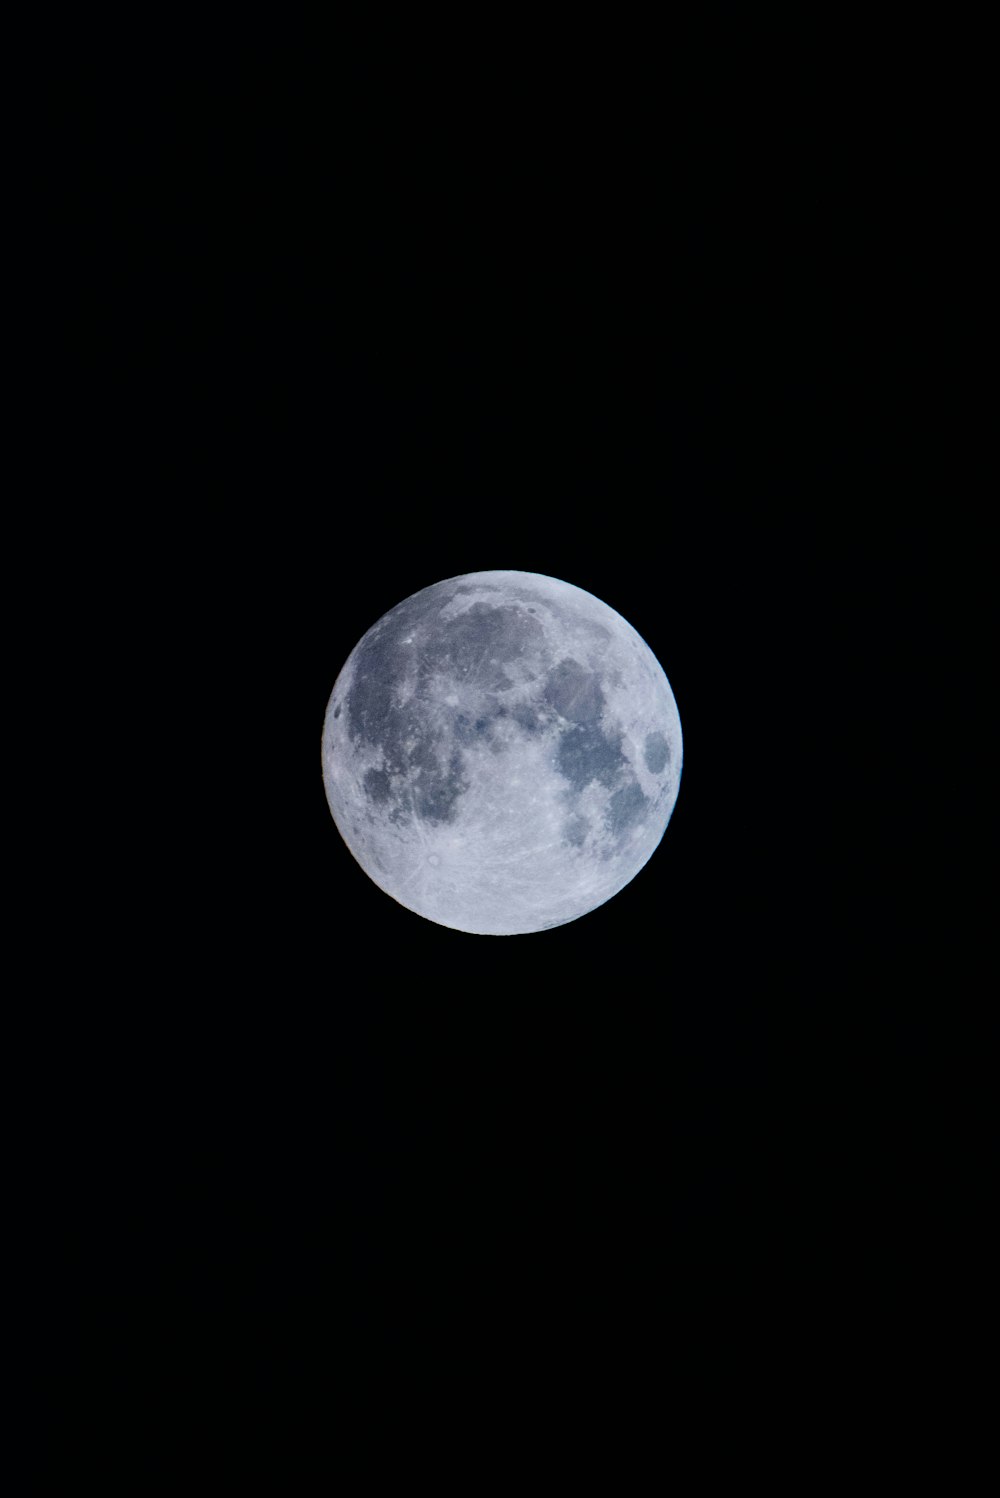 full moon at night